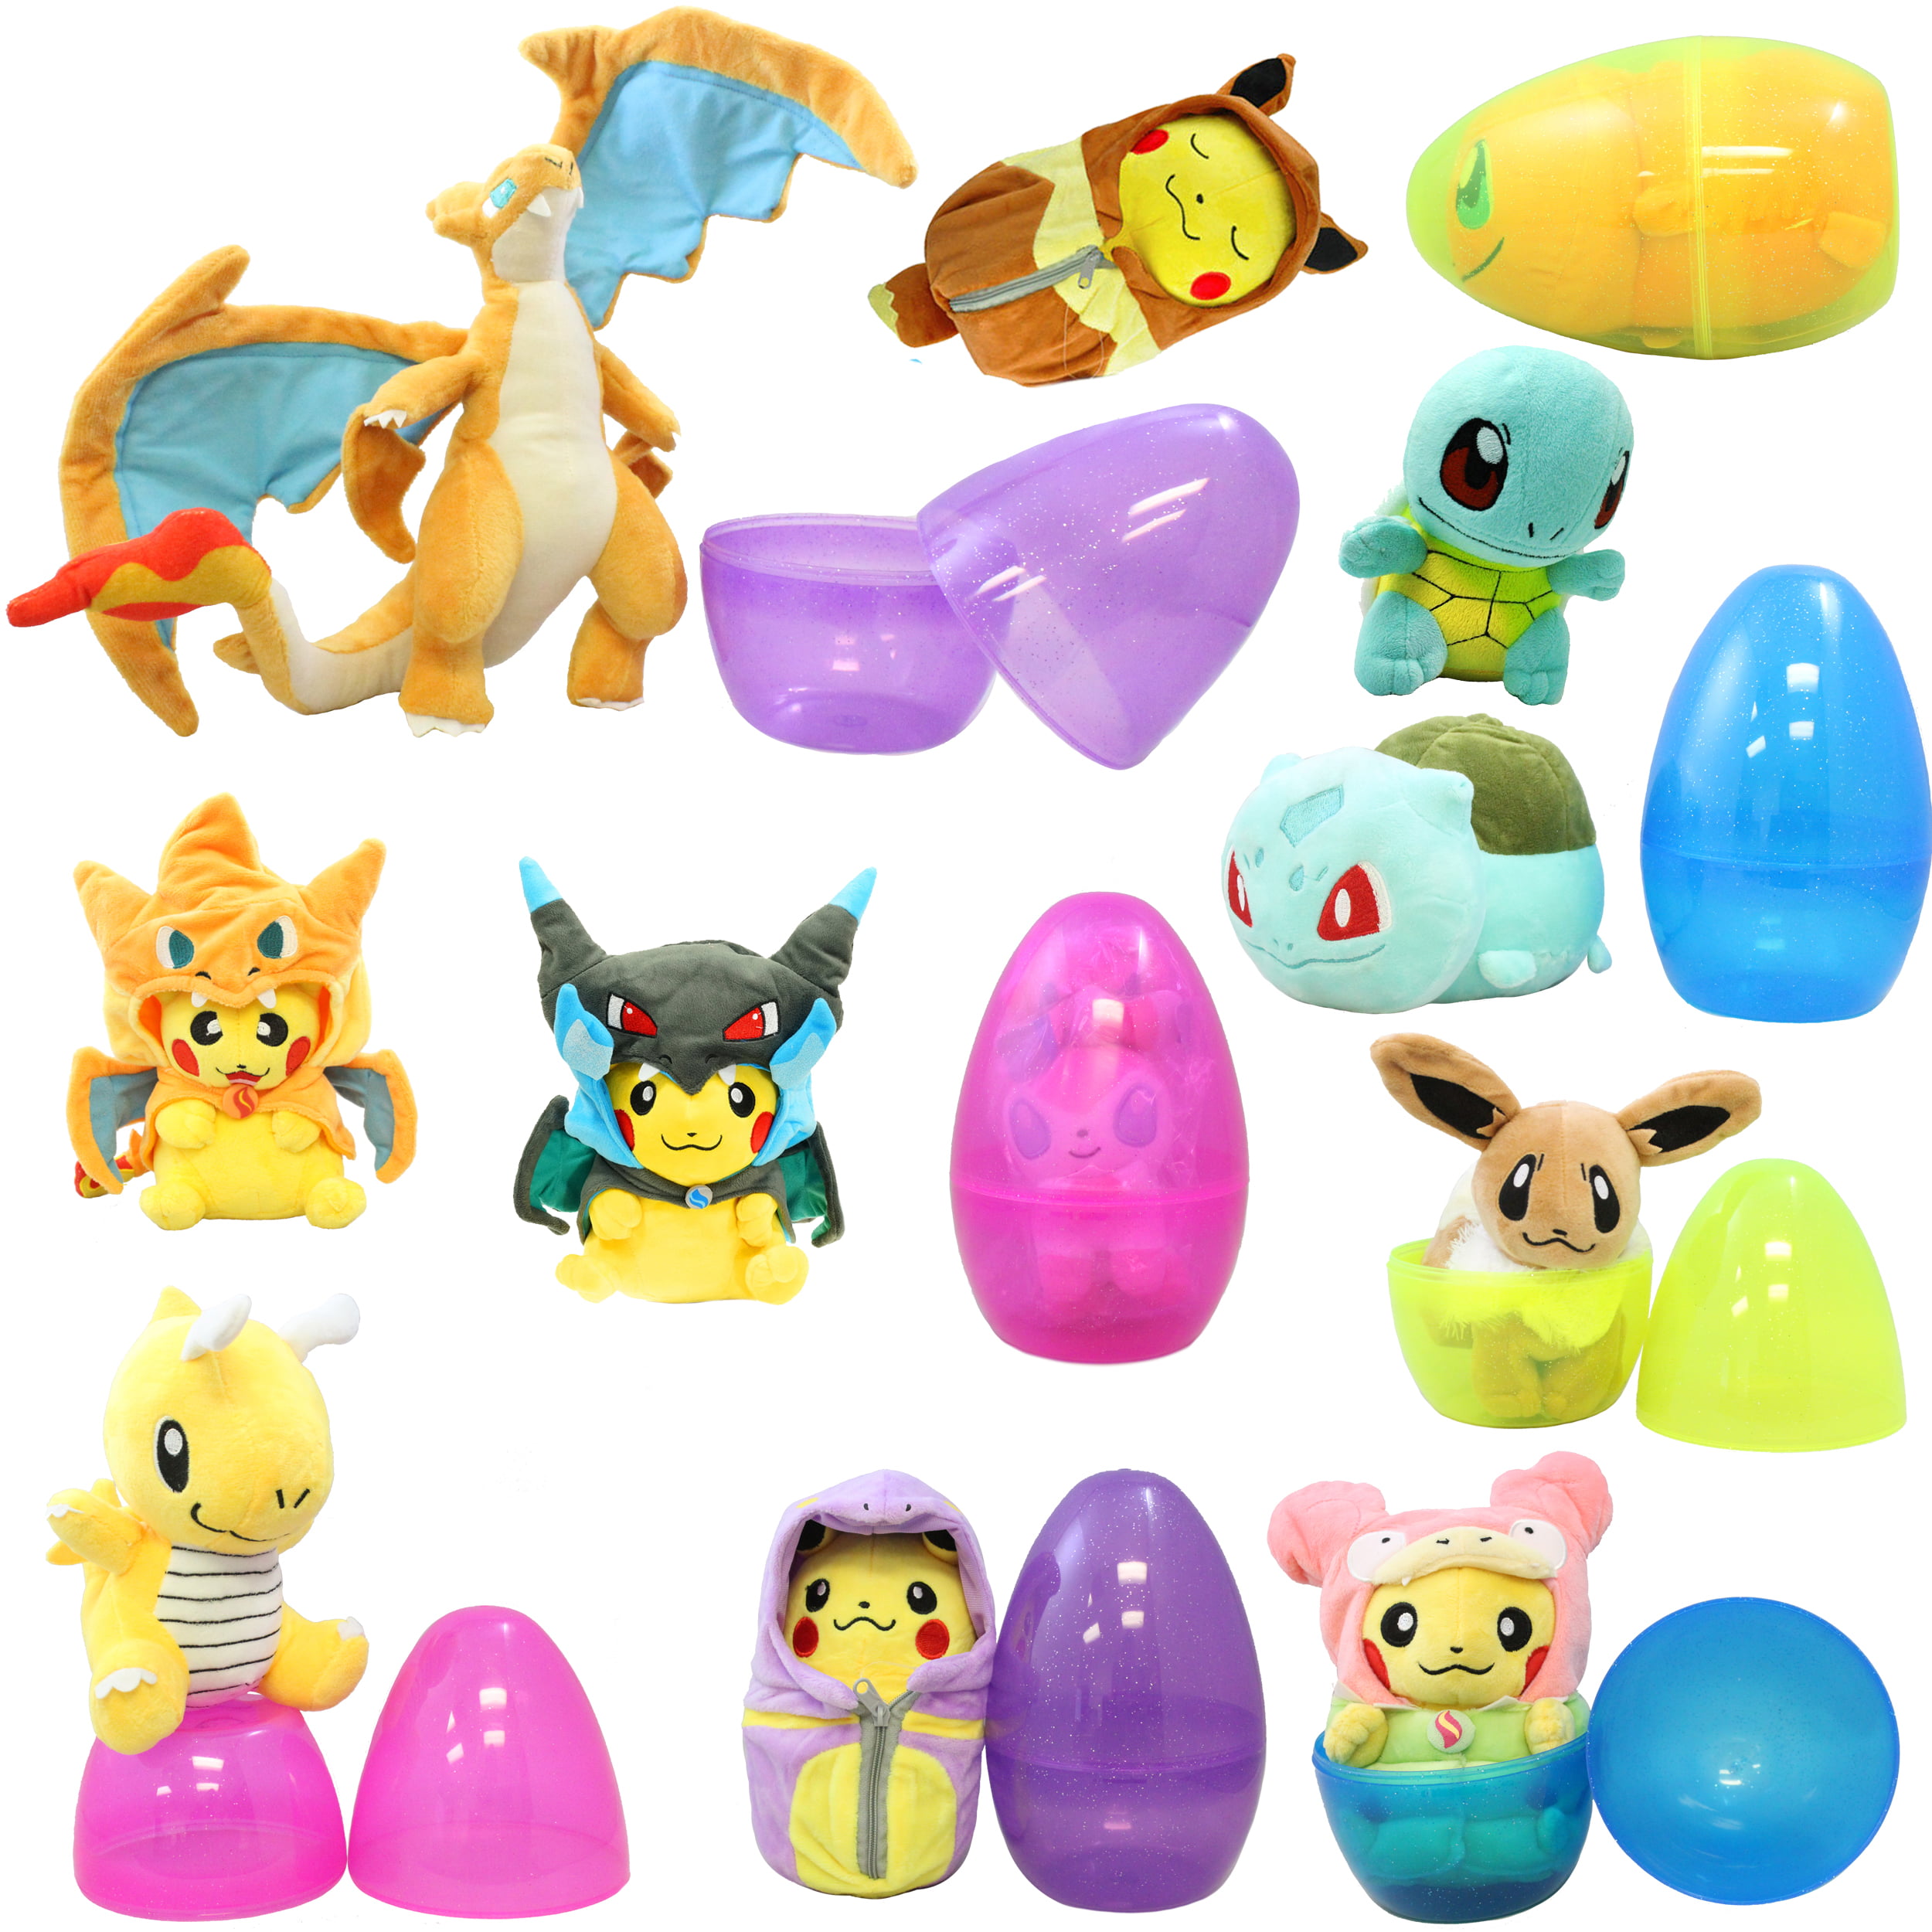 1 Pokemon Plush Toy Inside Giant 8 Inch Egg Wide Assortment Of